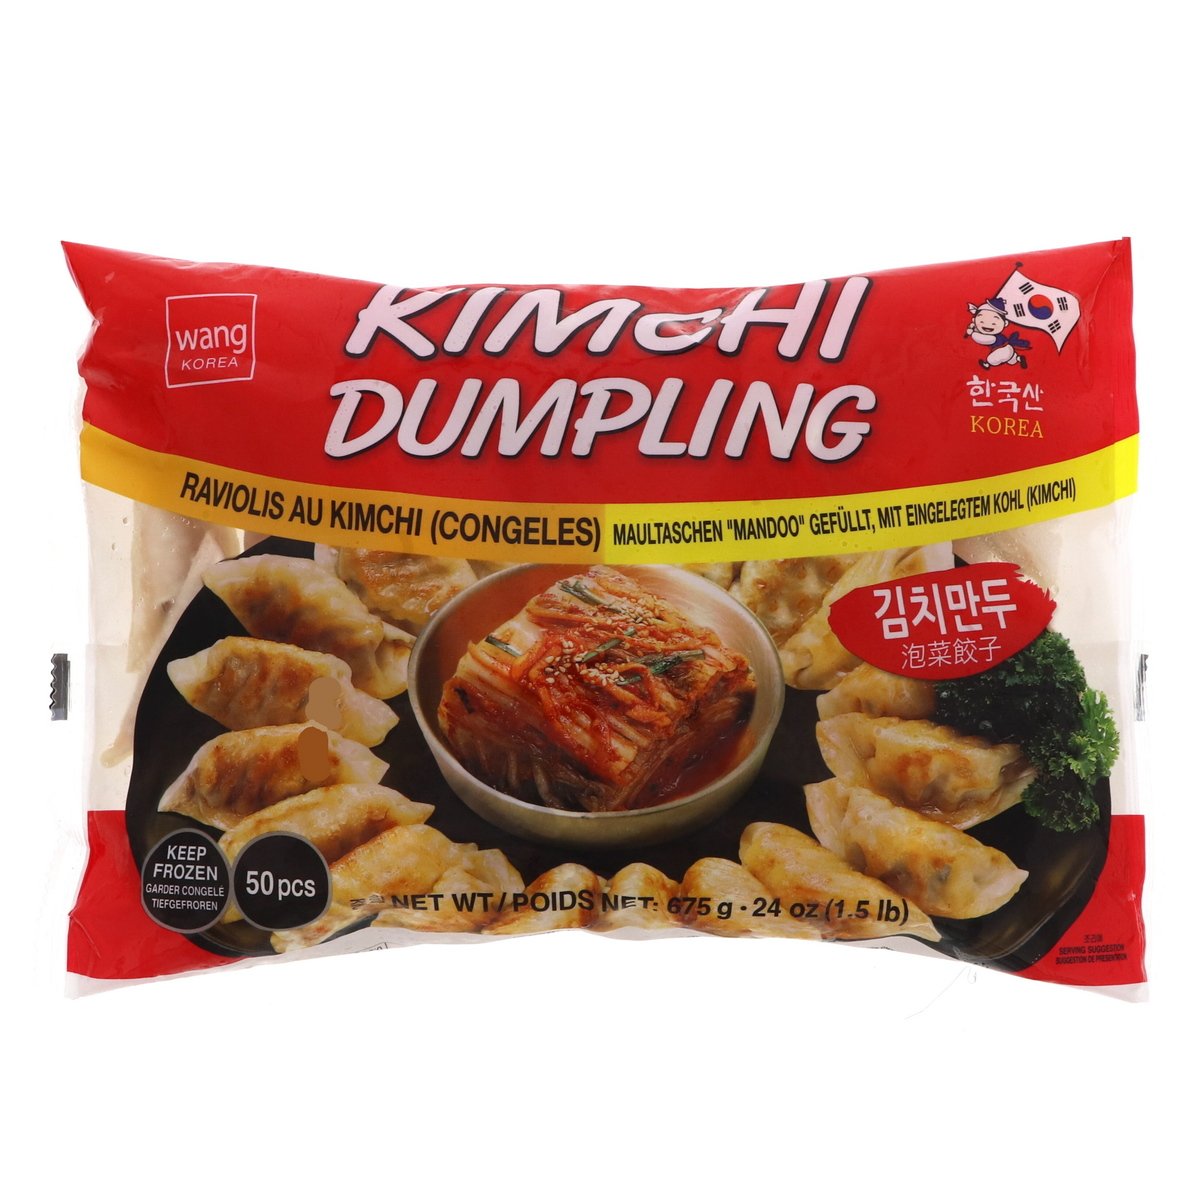 Wang Korea Kimchi Dumpling 675 g